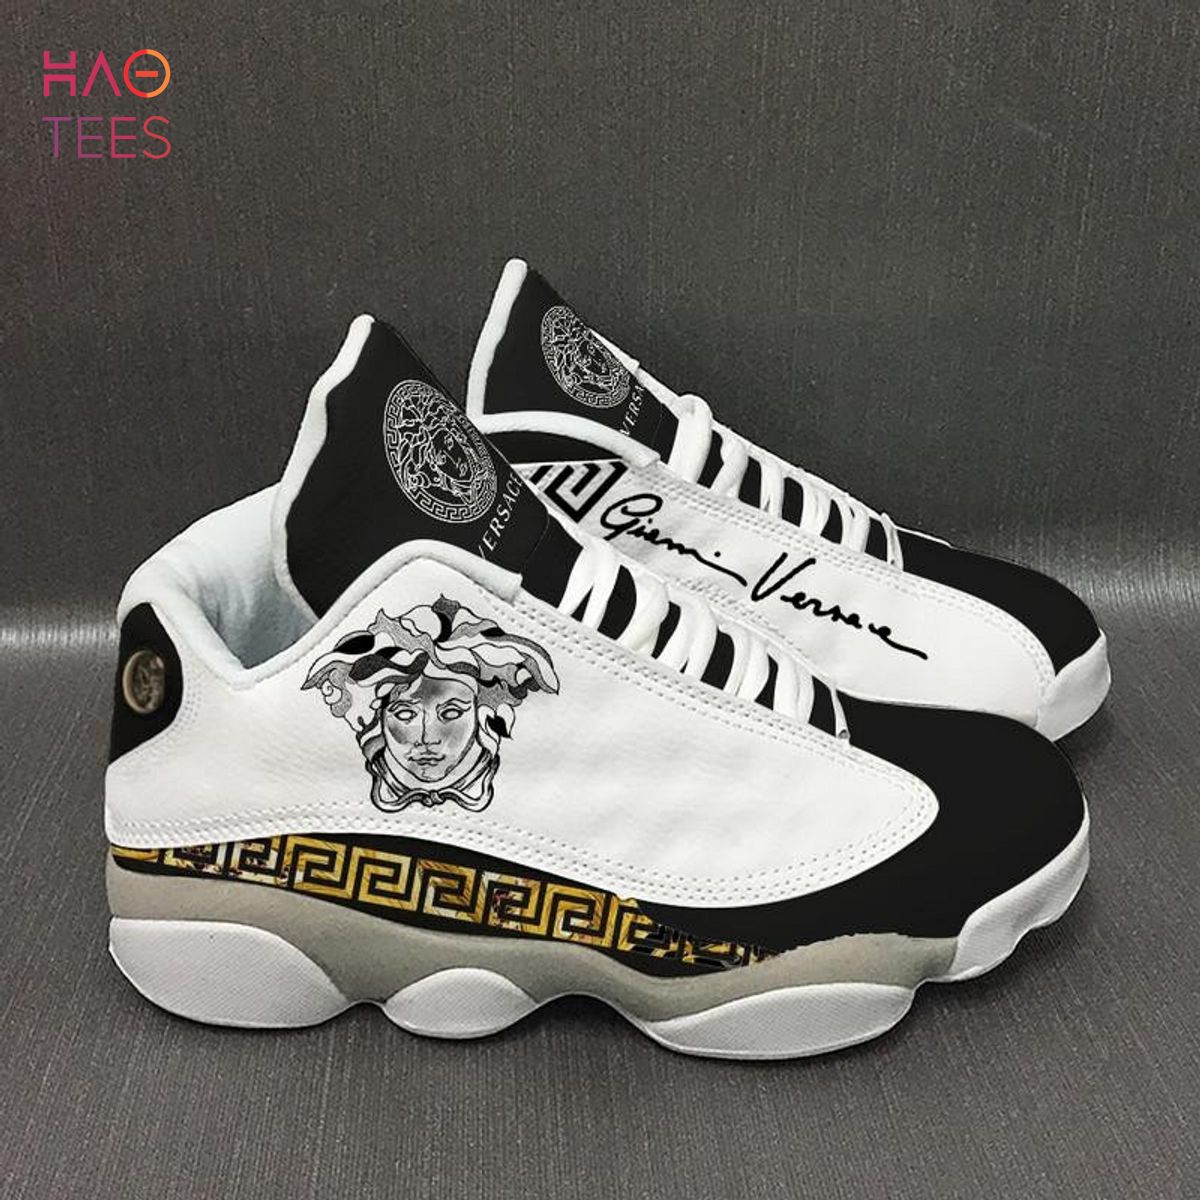 Air Jordan 13 Mix Versace Black White Limited Edition Sneaker Shoes